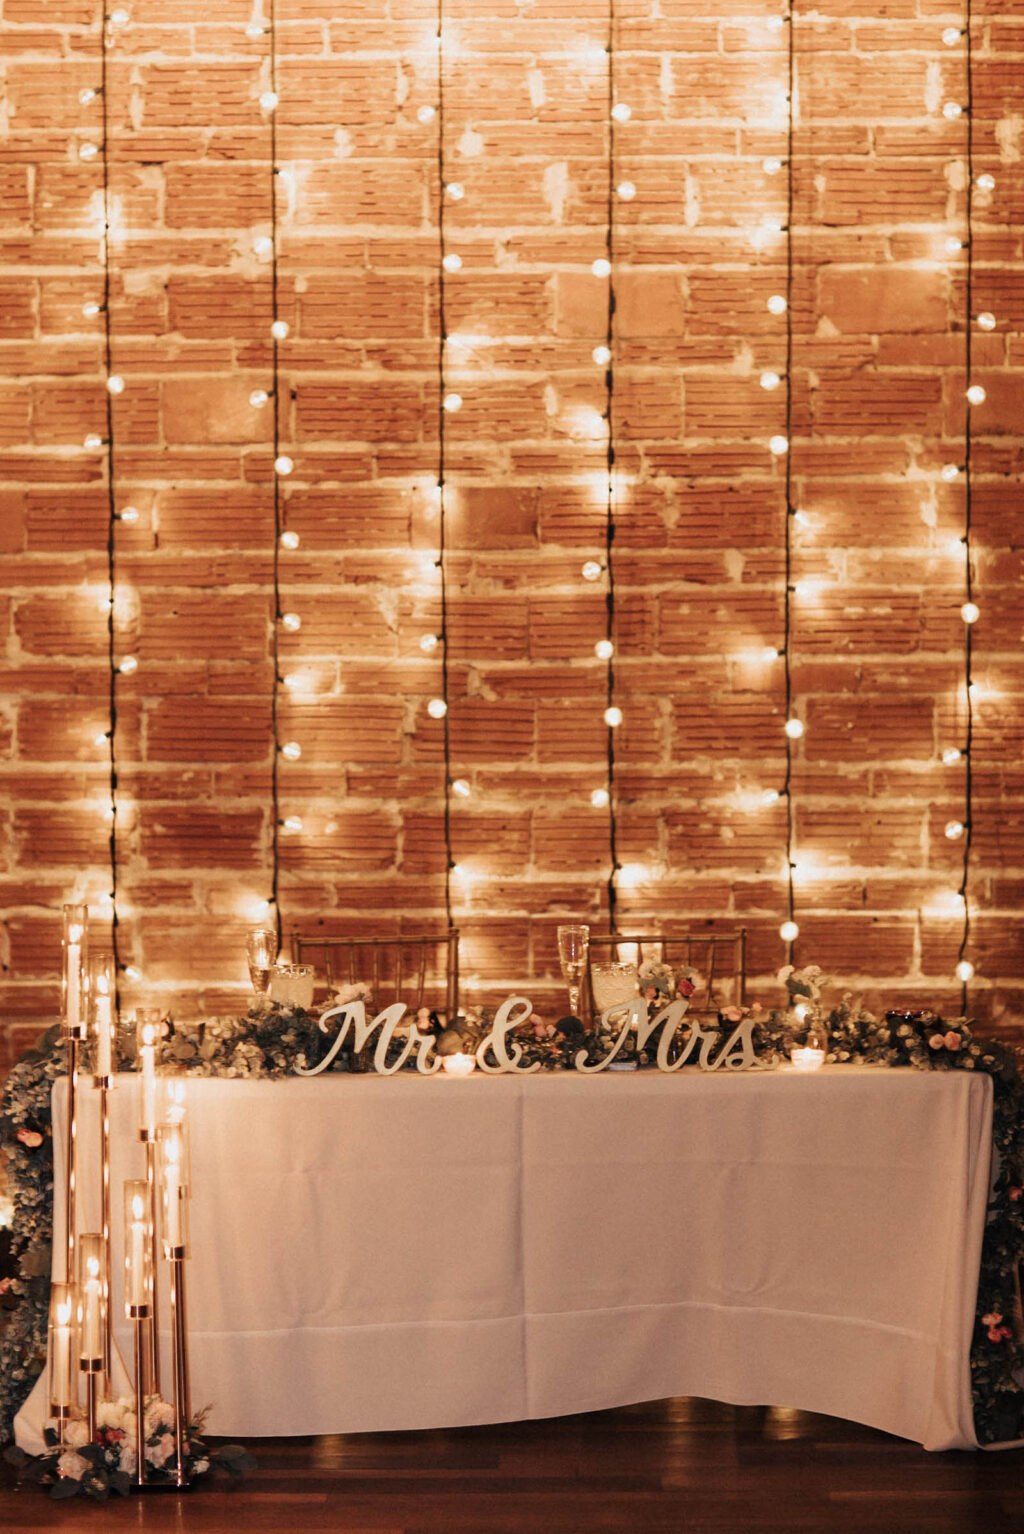 Sweetheart Table with Twinkling Light Décor in Industrial Wedding Venue | Florida Wedding Reception Nova 535